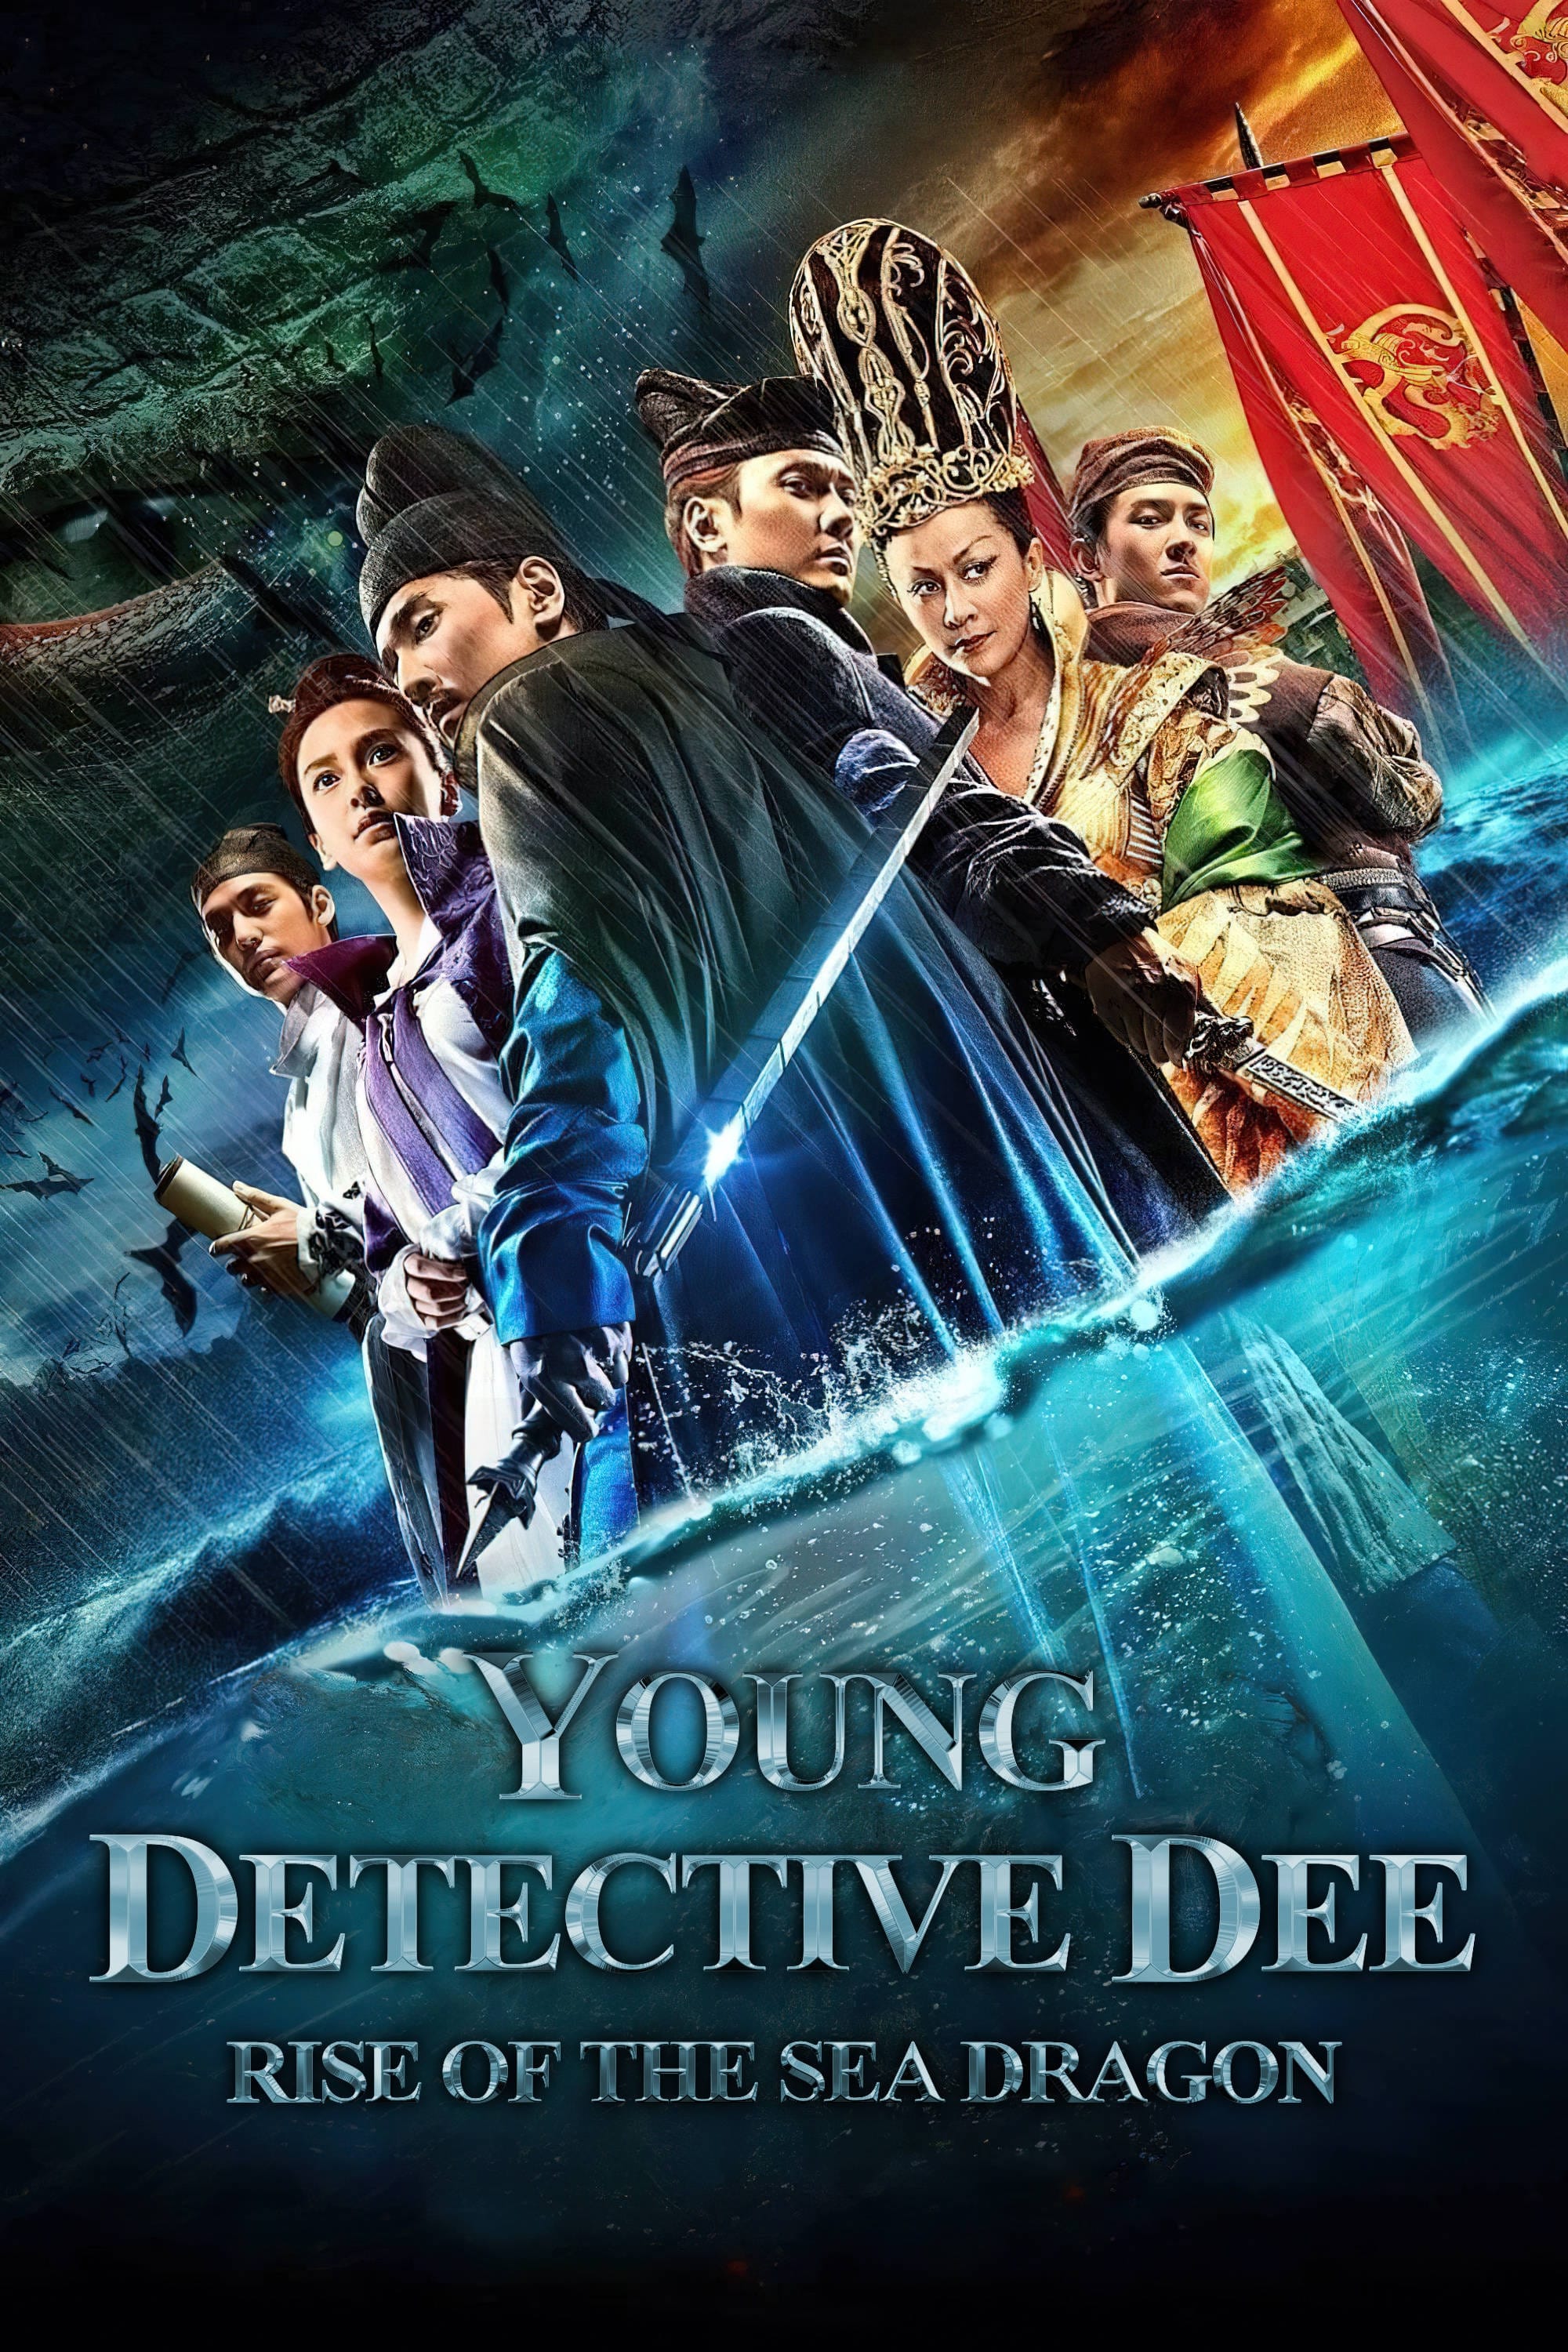 El joven Detective Dee: El poder del dragón marino (2013)